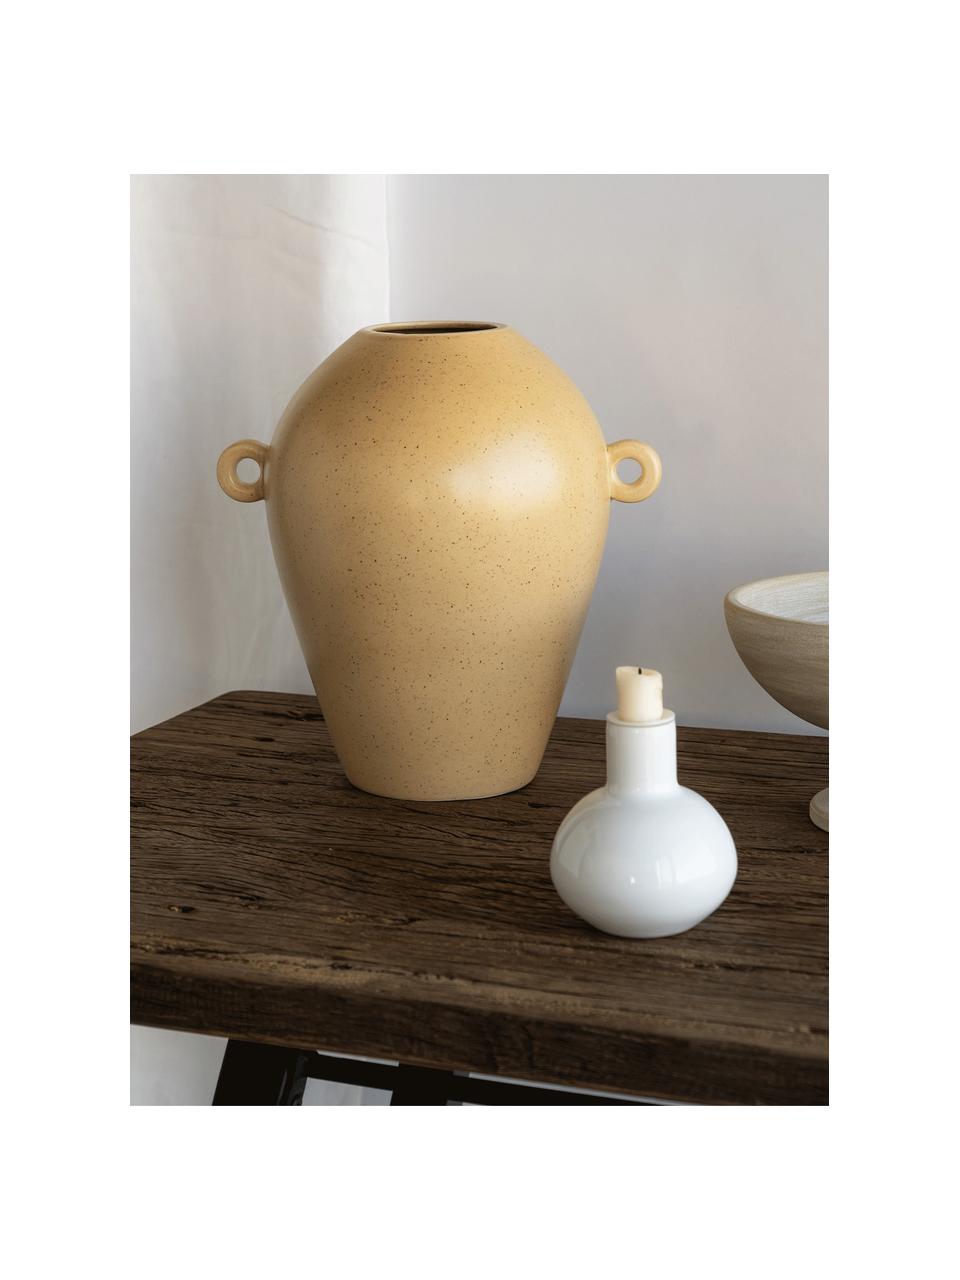 Handgefertigte Keramik-Vase Quiet in Beige, Keramik, Beige, B 29 x H 30 cm